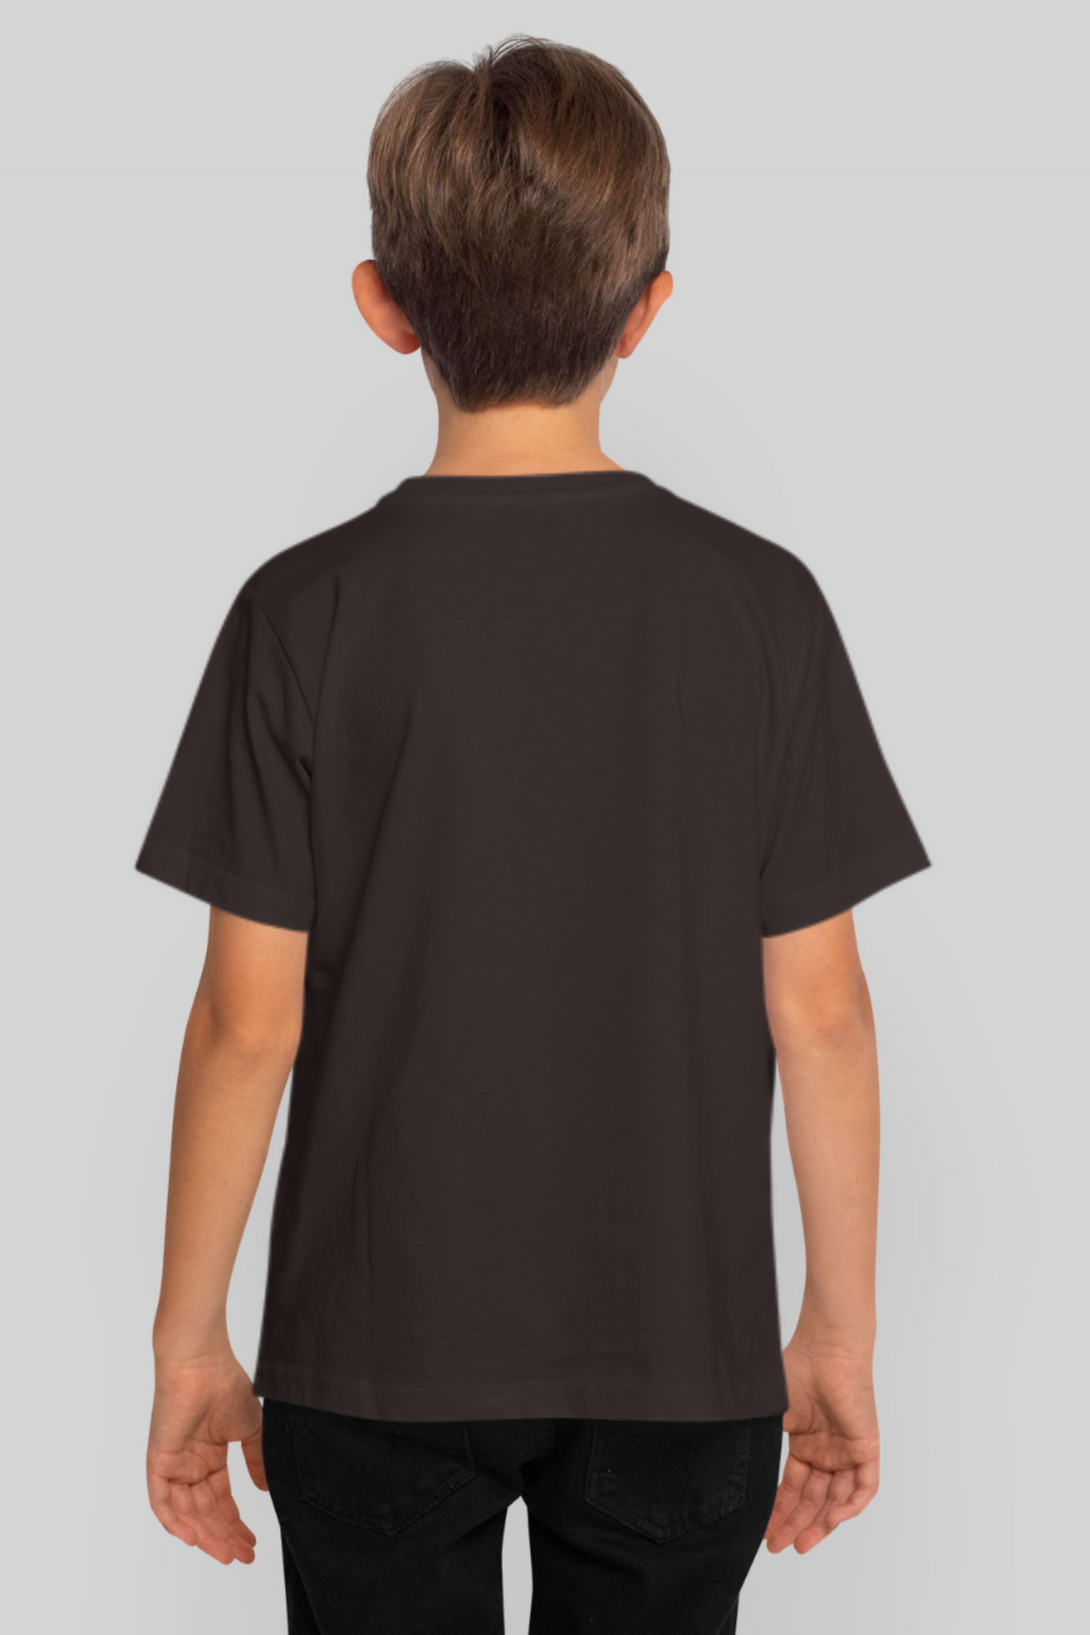 Coffee Brown T-Shirt For Boy - WowWaves - 2